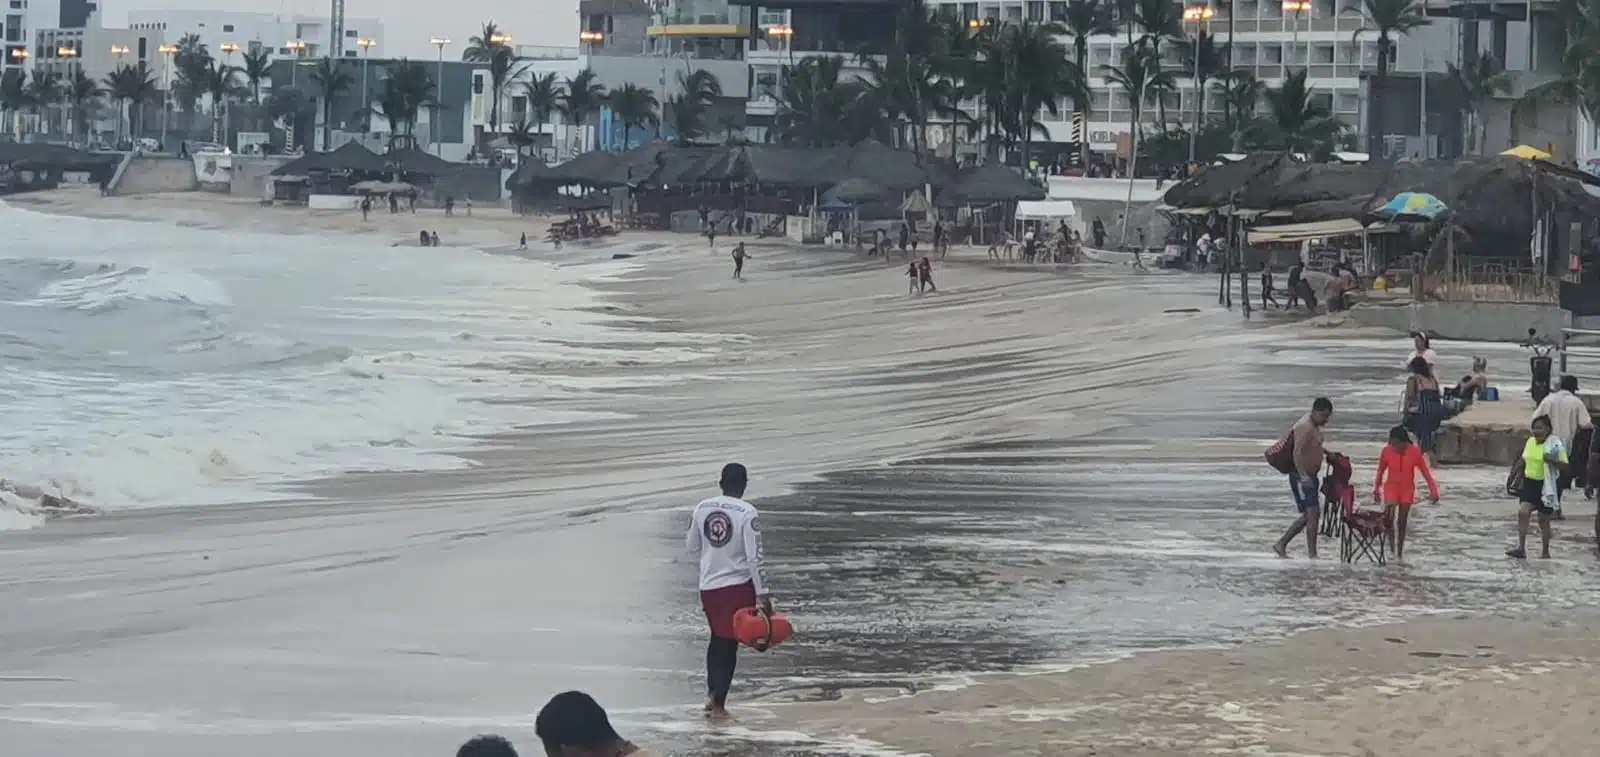 Oleaje alto continua en playas de Mazatlán